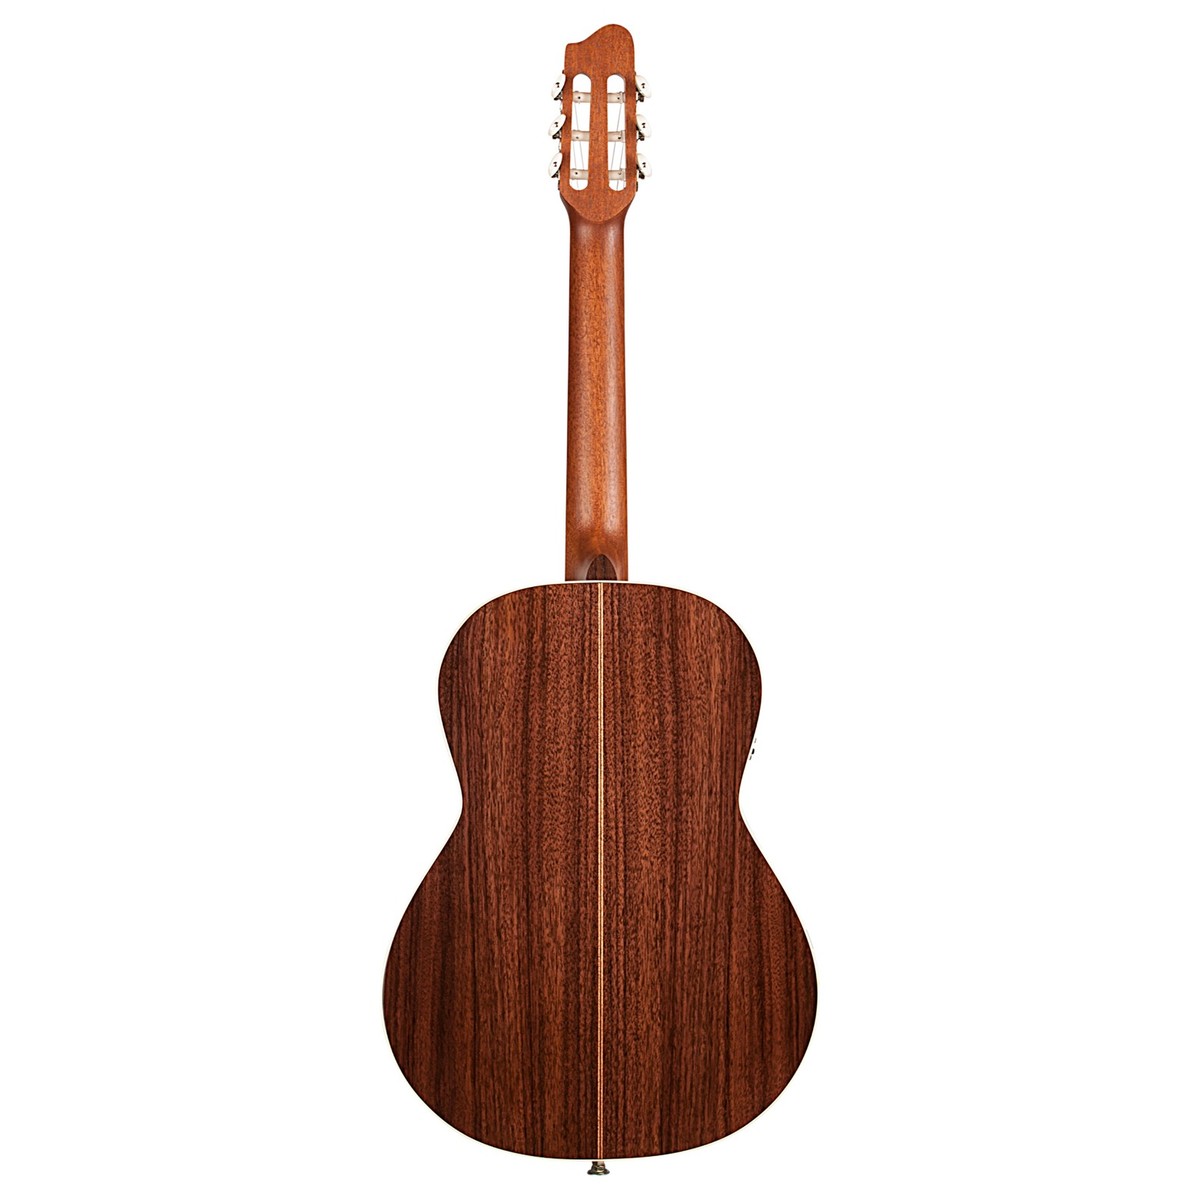 La Patrie Collection Cedre Palissandre Rw - Natural - Classical guitar 4/4 size - Variation 1